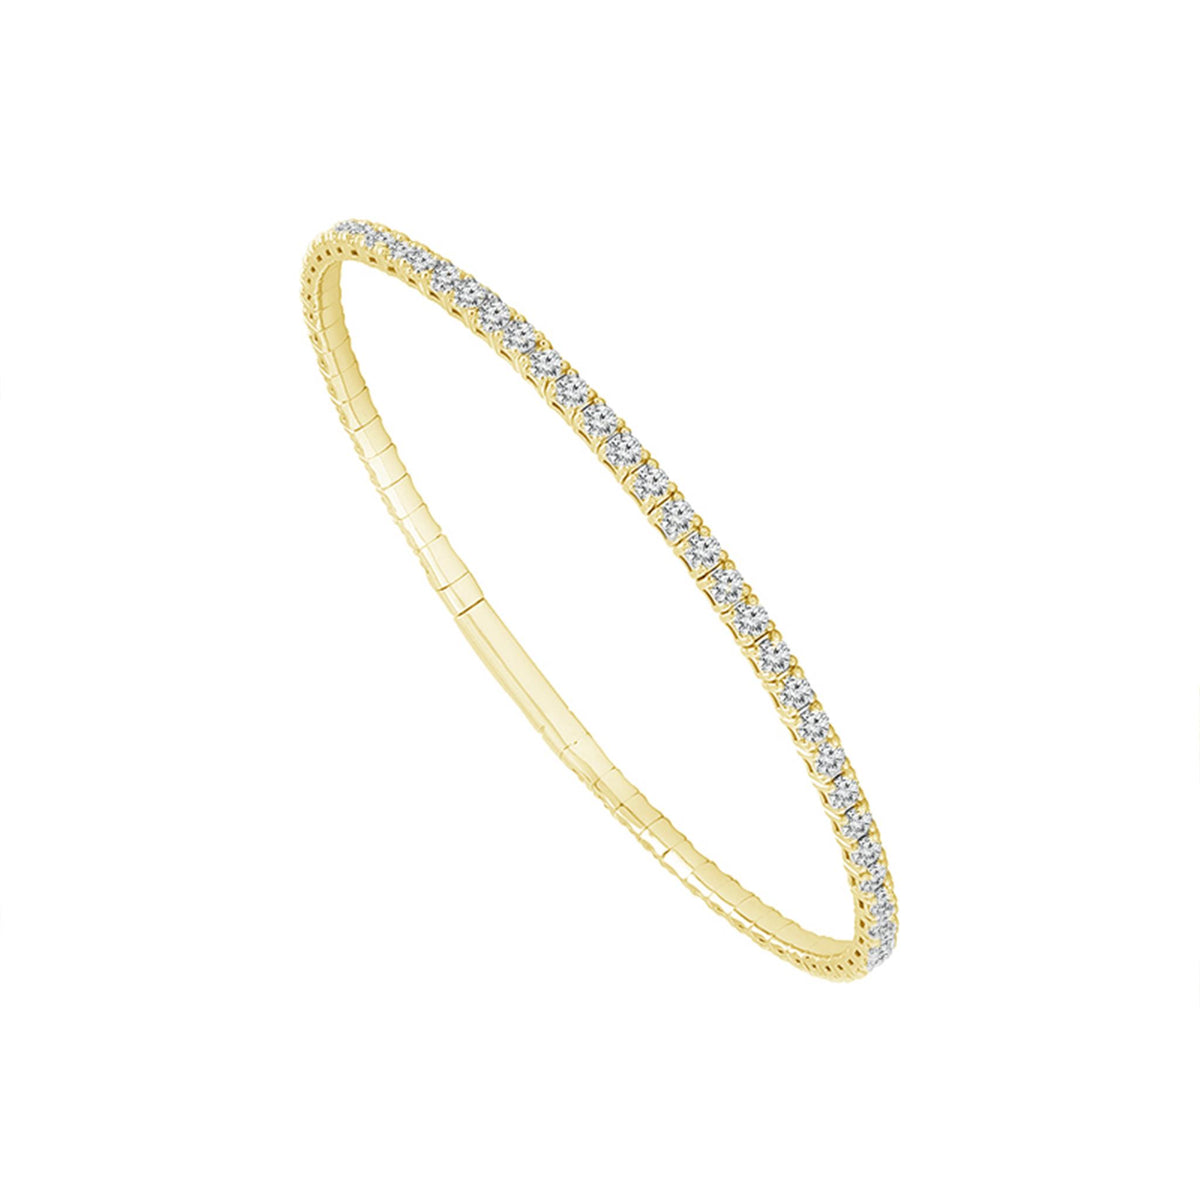 14Kt Yellow Gold Eternity Flex Bangle Bracelet With 3.50cttw Natural Diamonds